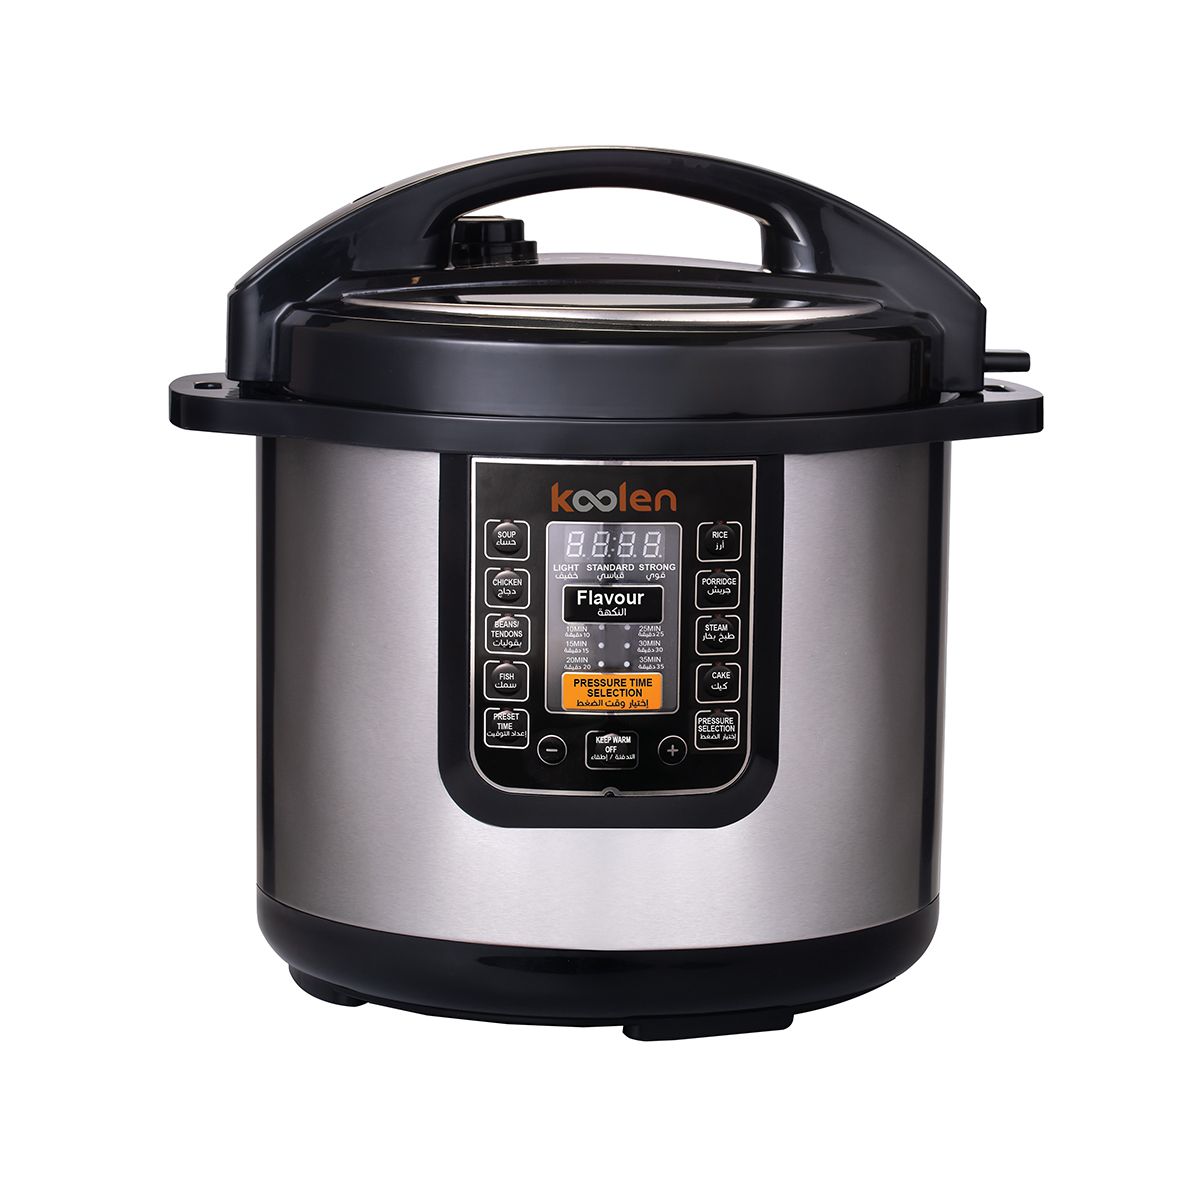 Koolen Pressure Cooker 12 Liter, 1600W, Memory Function, 12 Functions, Steel  - 816106005